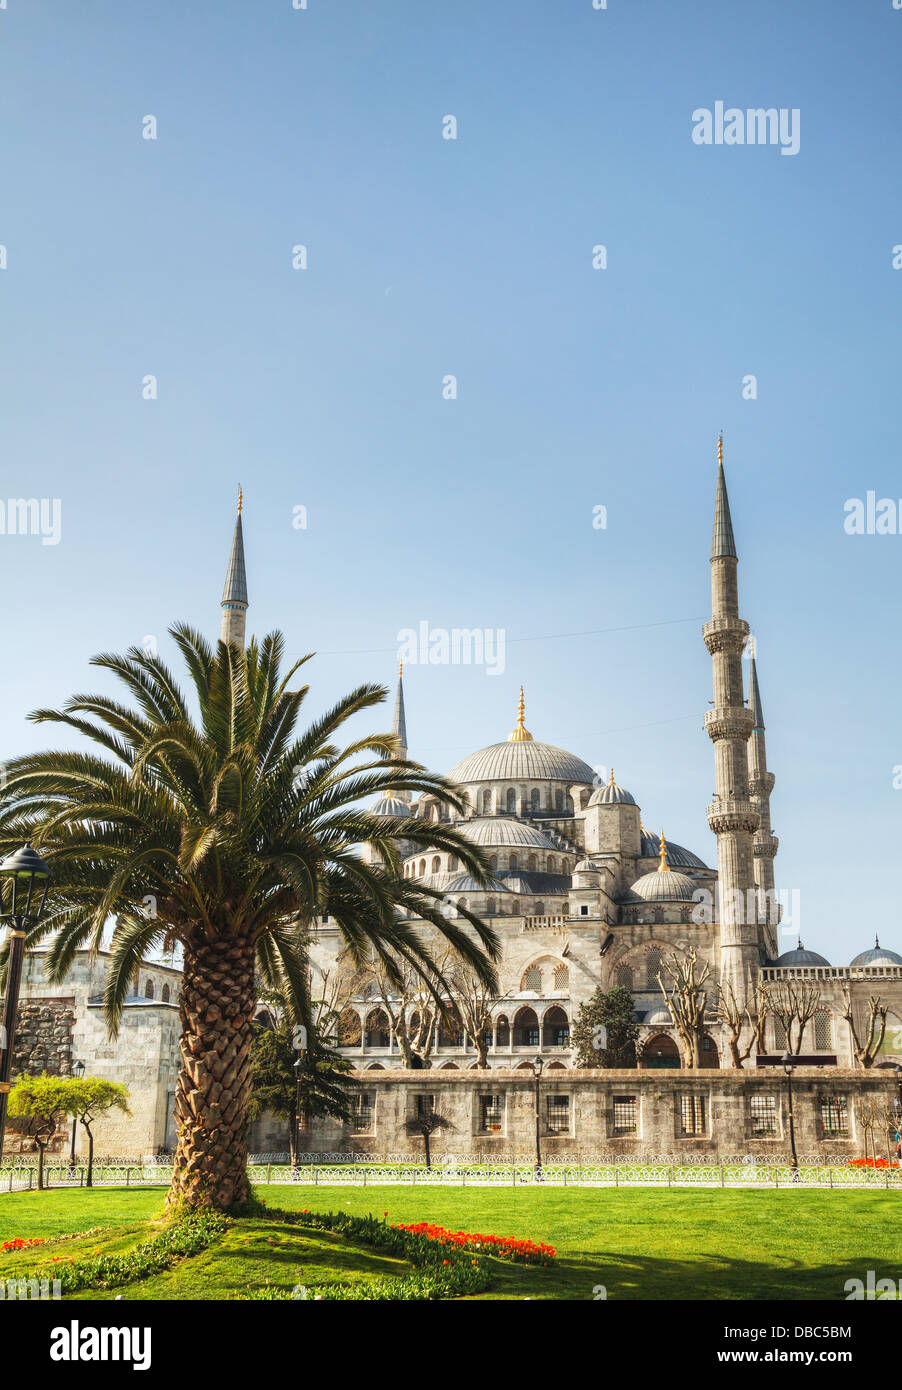 Sultan Ahmed Mosque (blaue Moschee) in Istanbul, Türkei am Morgen Stockfoto